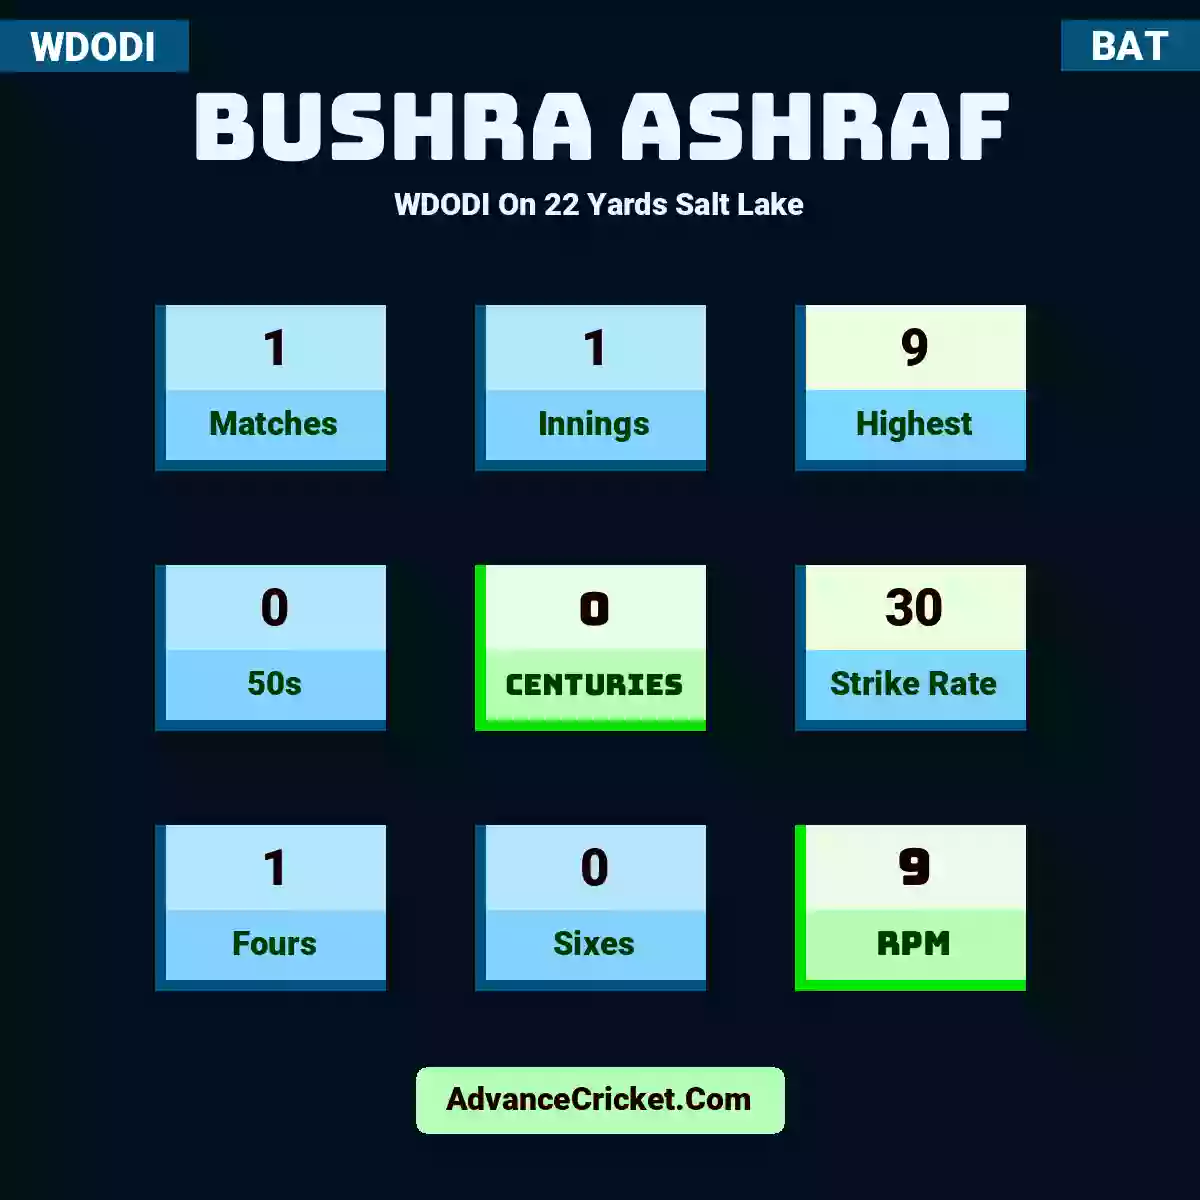 Bushra Ashraf WDODI  On 22 Yards Salt Lake, Bushra Ashraf played 1 matches, scored 9 runs as highest, 0 half-centuries, and 0 centuries, with a strike rate of 30. B.Ashraf hit 1 fours and 0 sixes, with an RPM of 9.